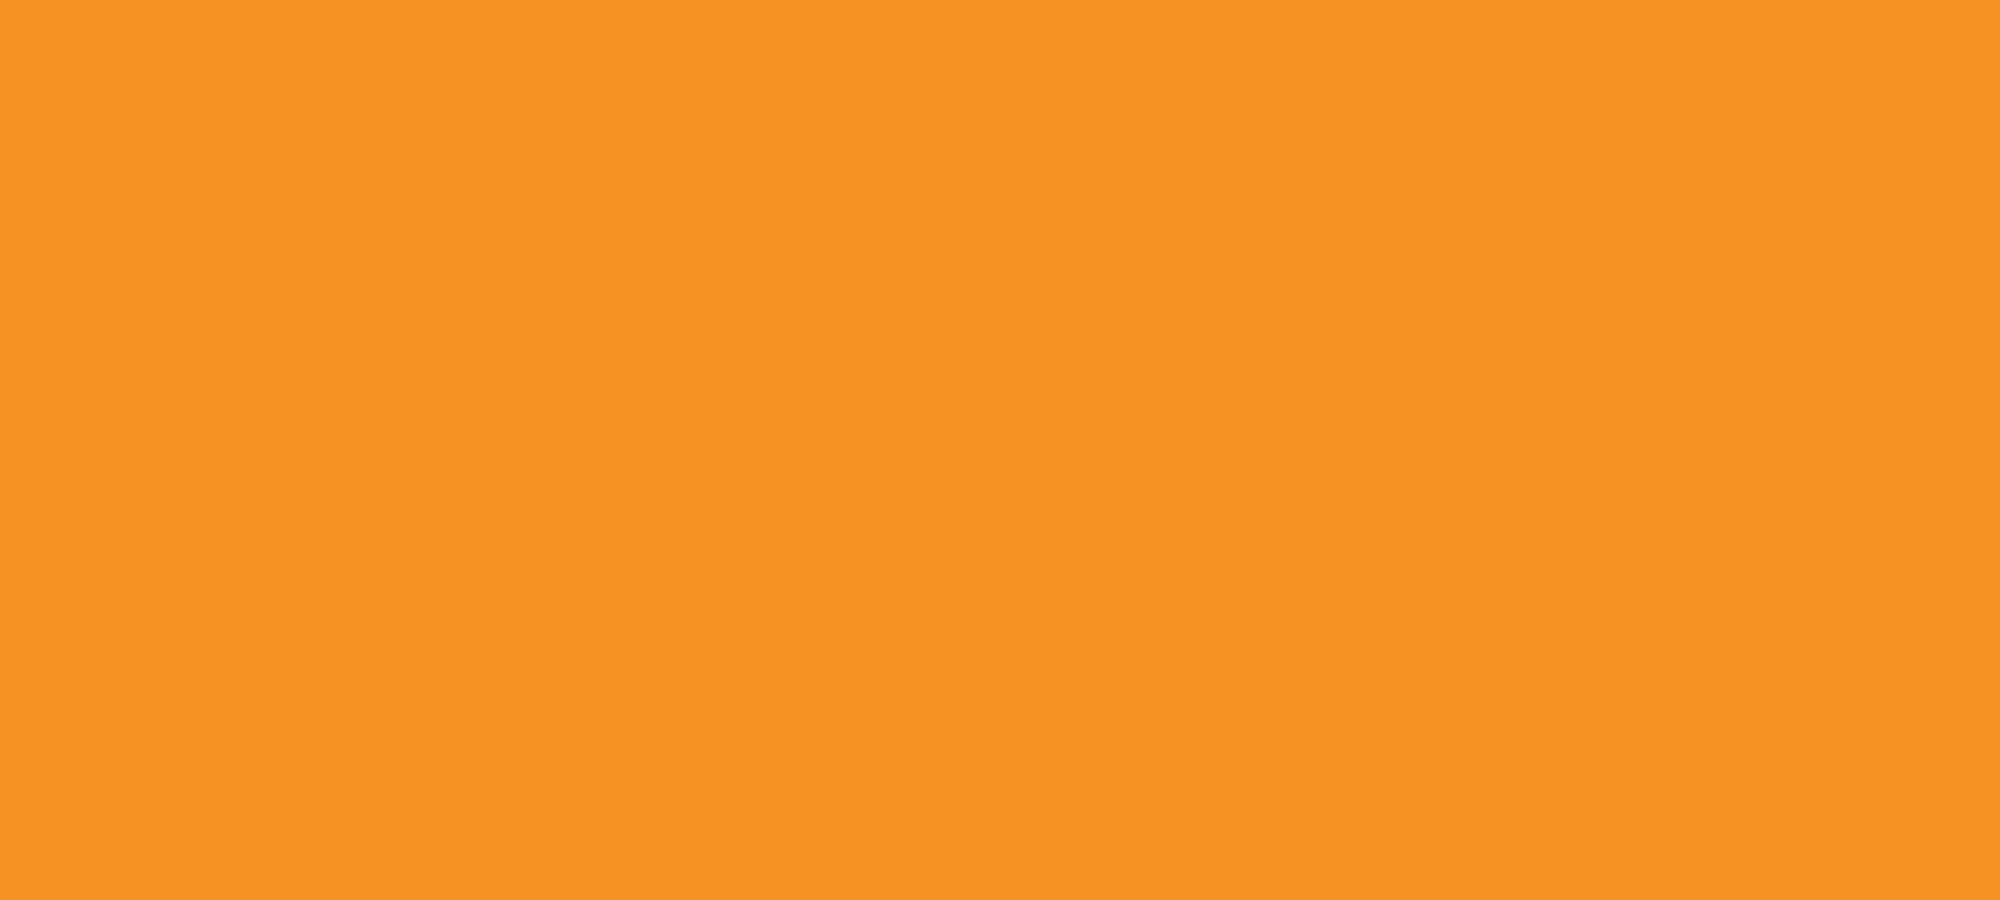 Orange ersg background